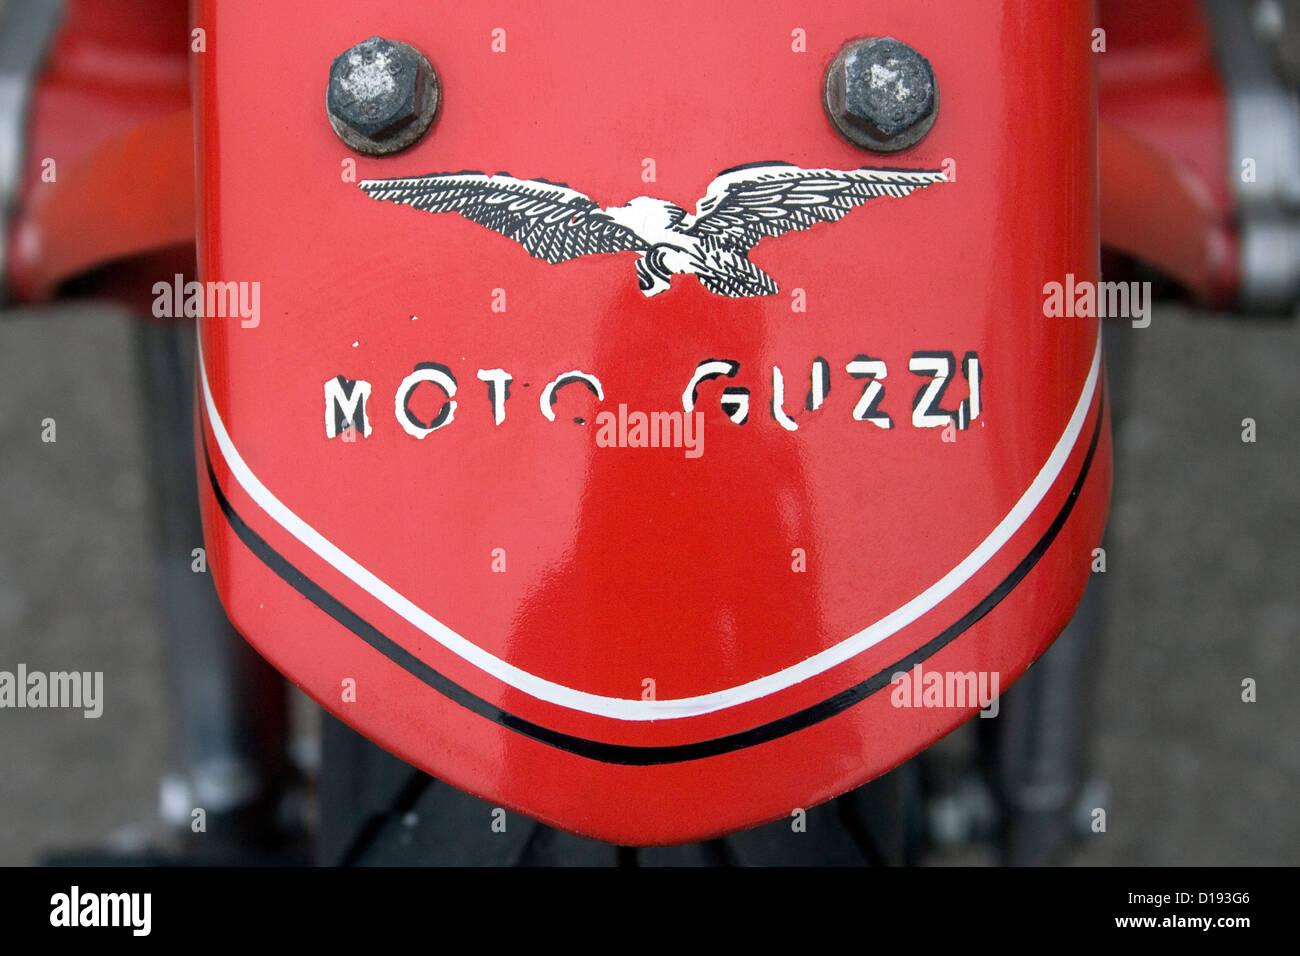 The red fender of a classic Moto Guzzi motorbike. Stock Photo